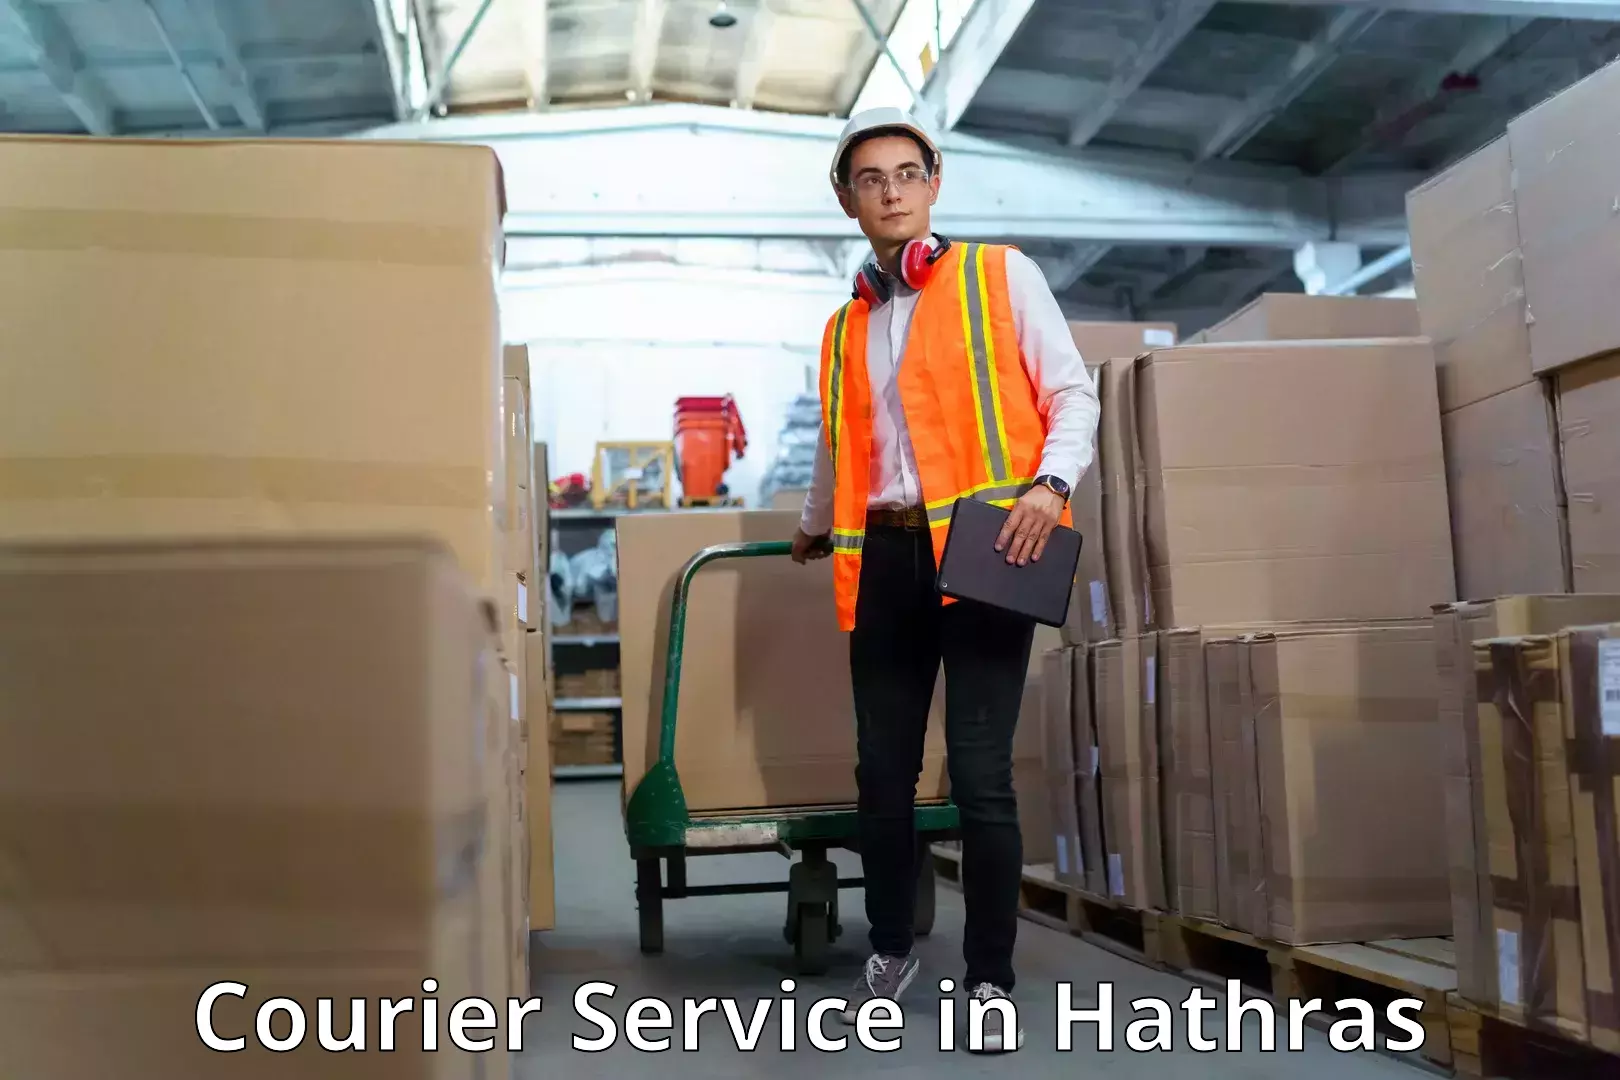 Diverse delivery methods in Hathras